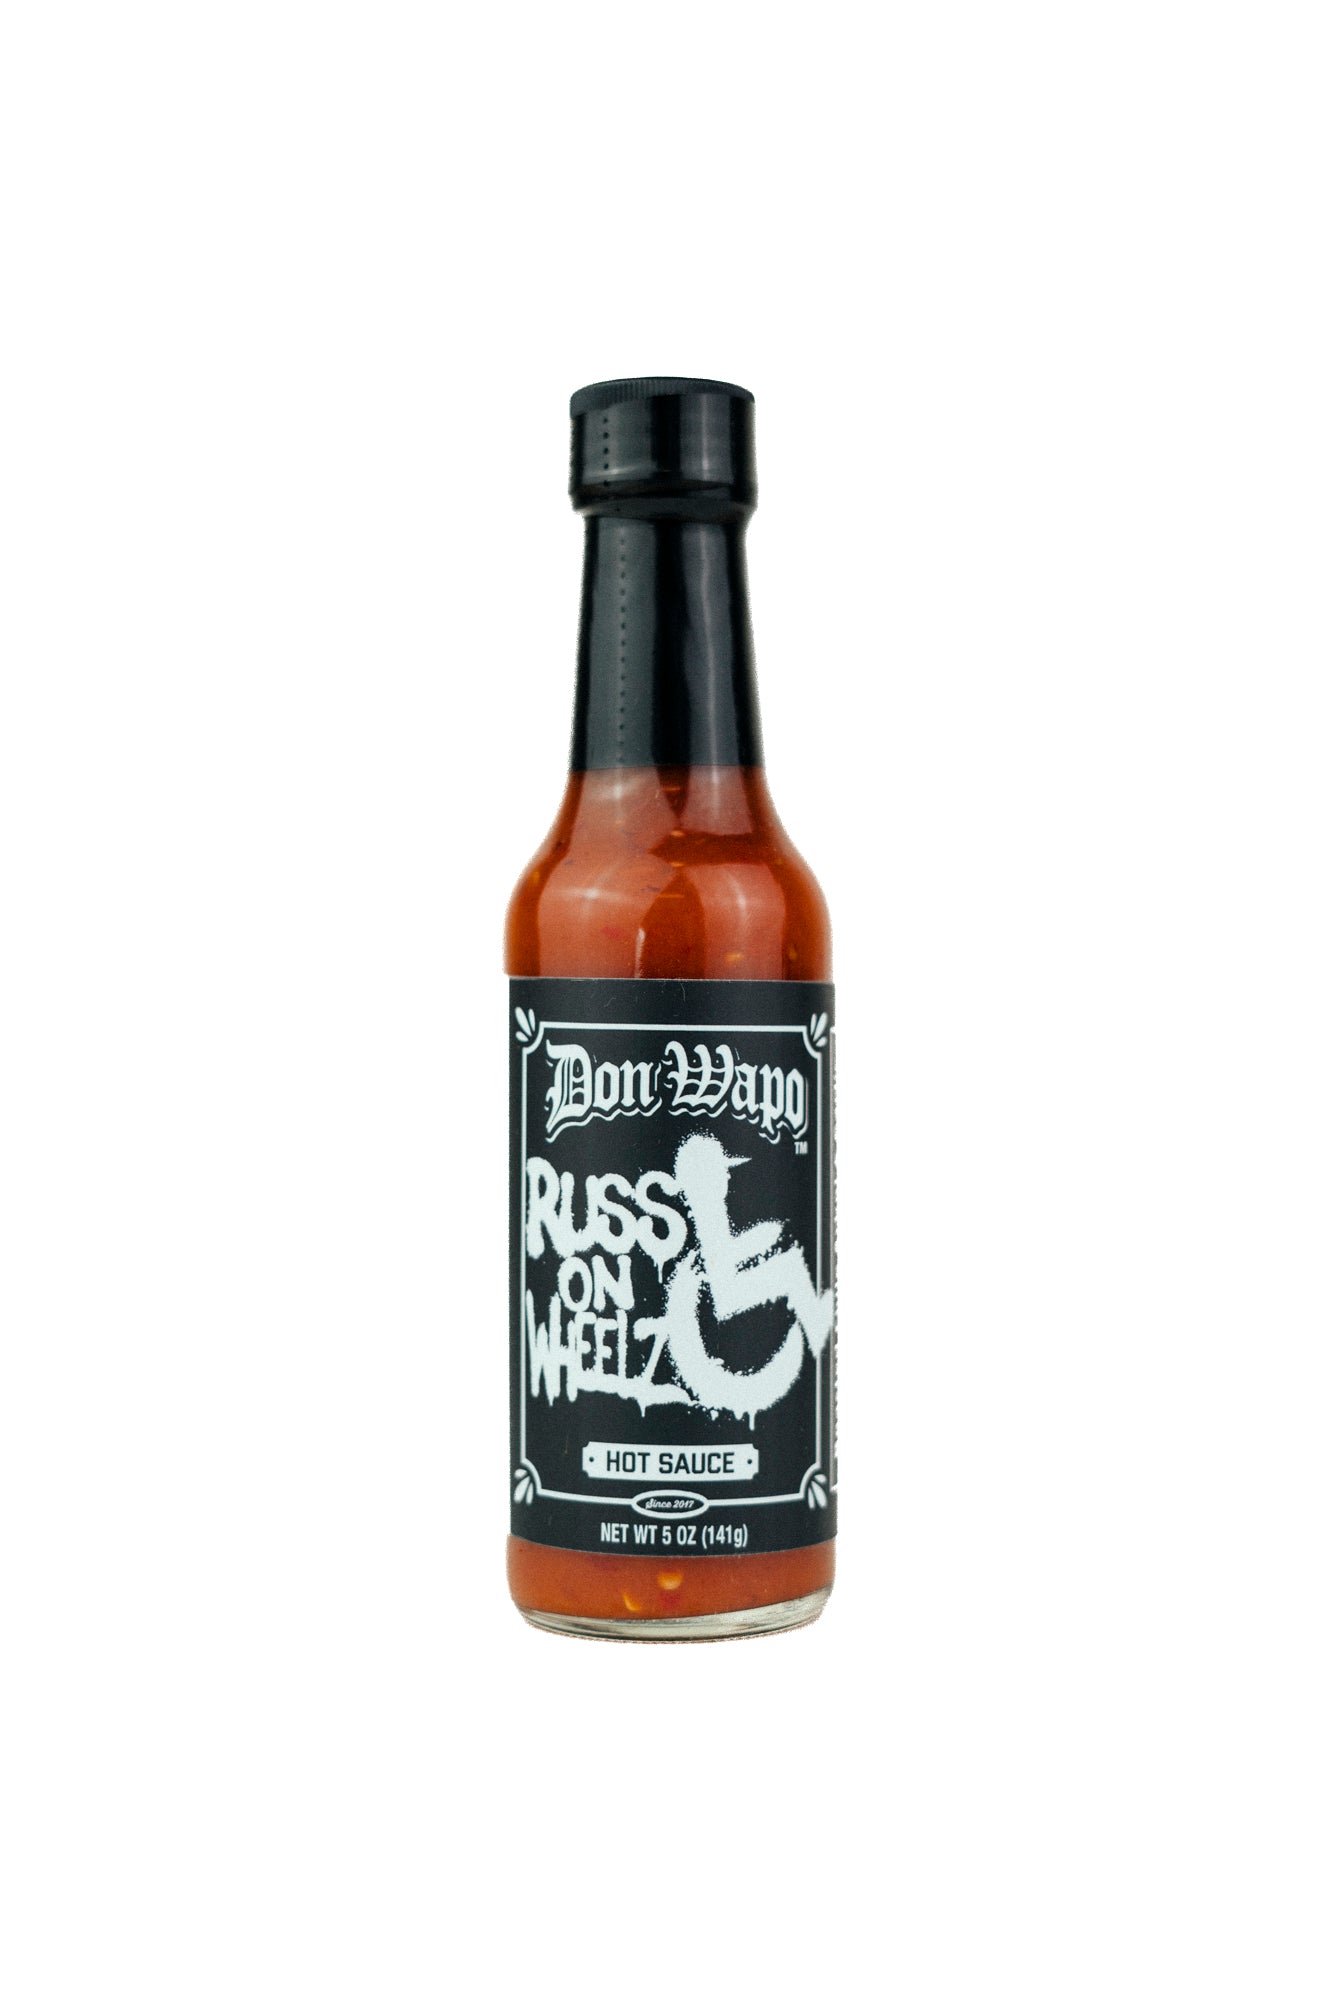 Russ on Wheels "La Primera" Don Wapo Hot Sauce Re-Label